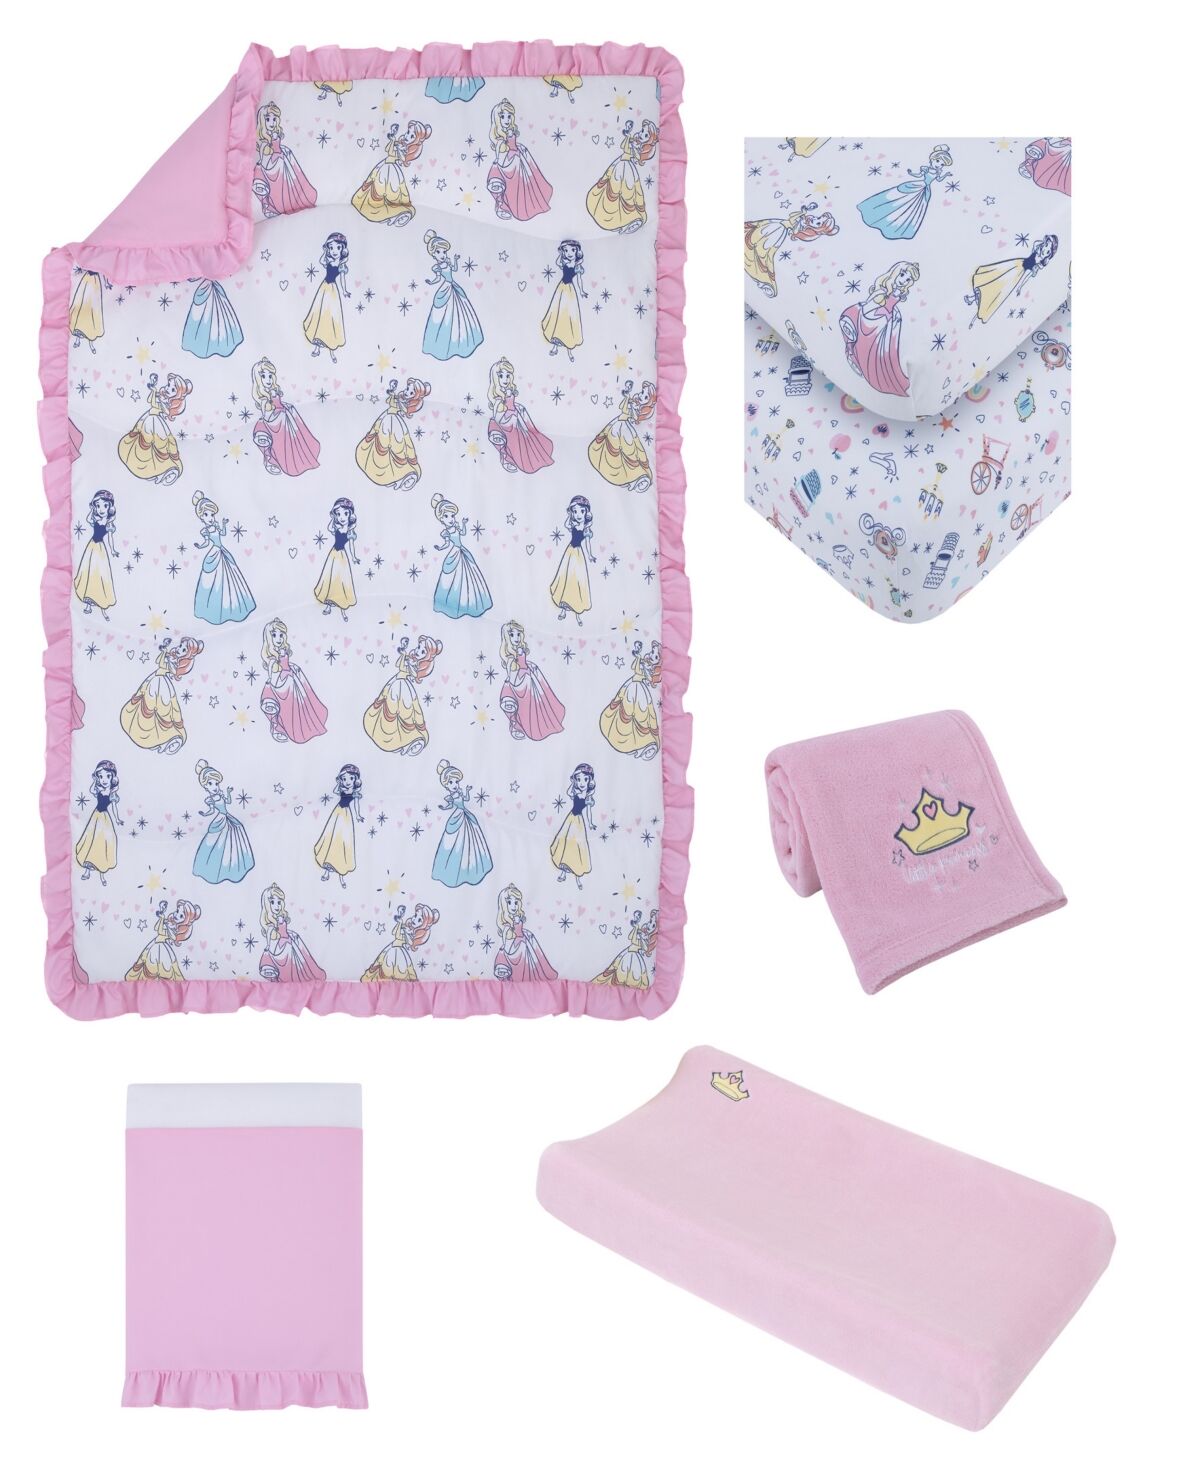 Disney Little Princess 6 Piece Crib Bedding Set - Pink